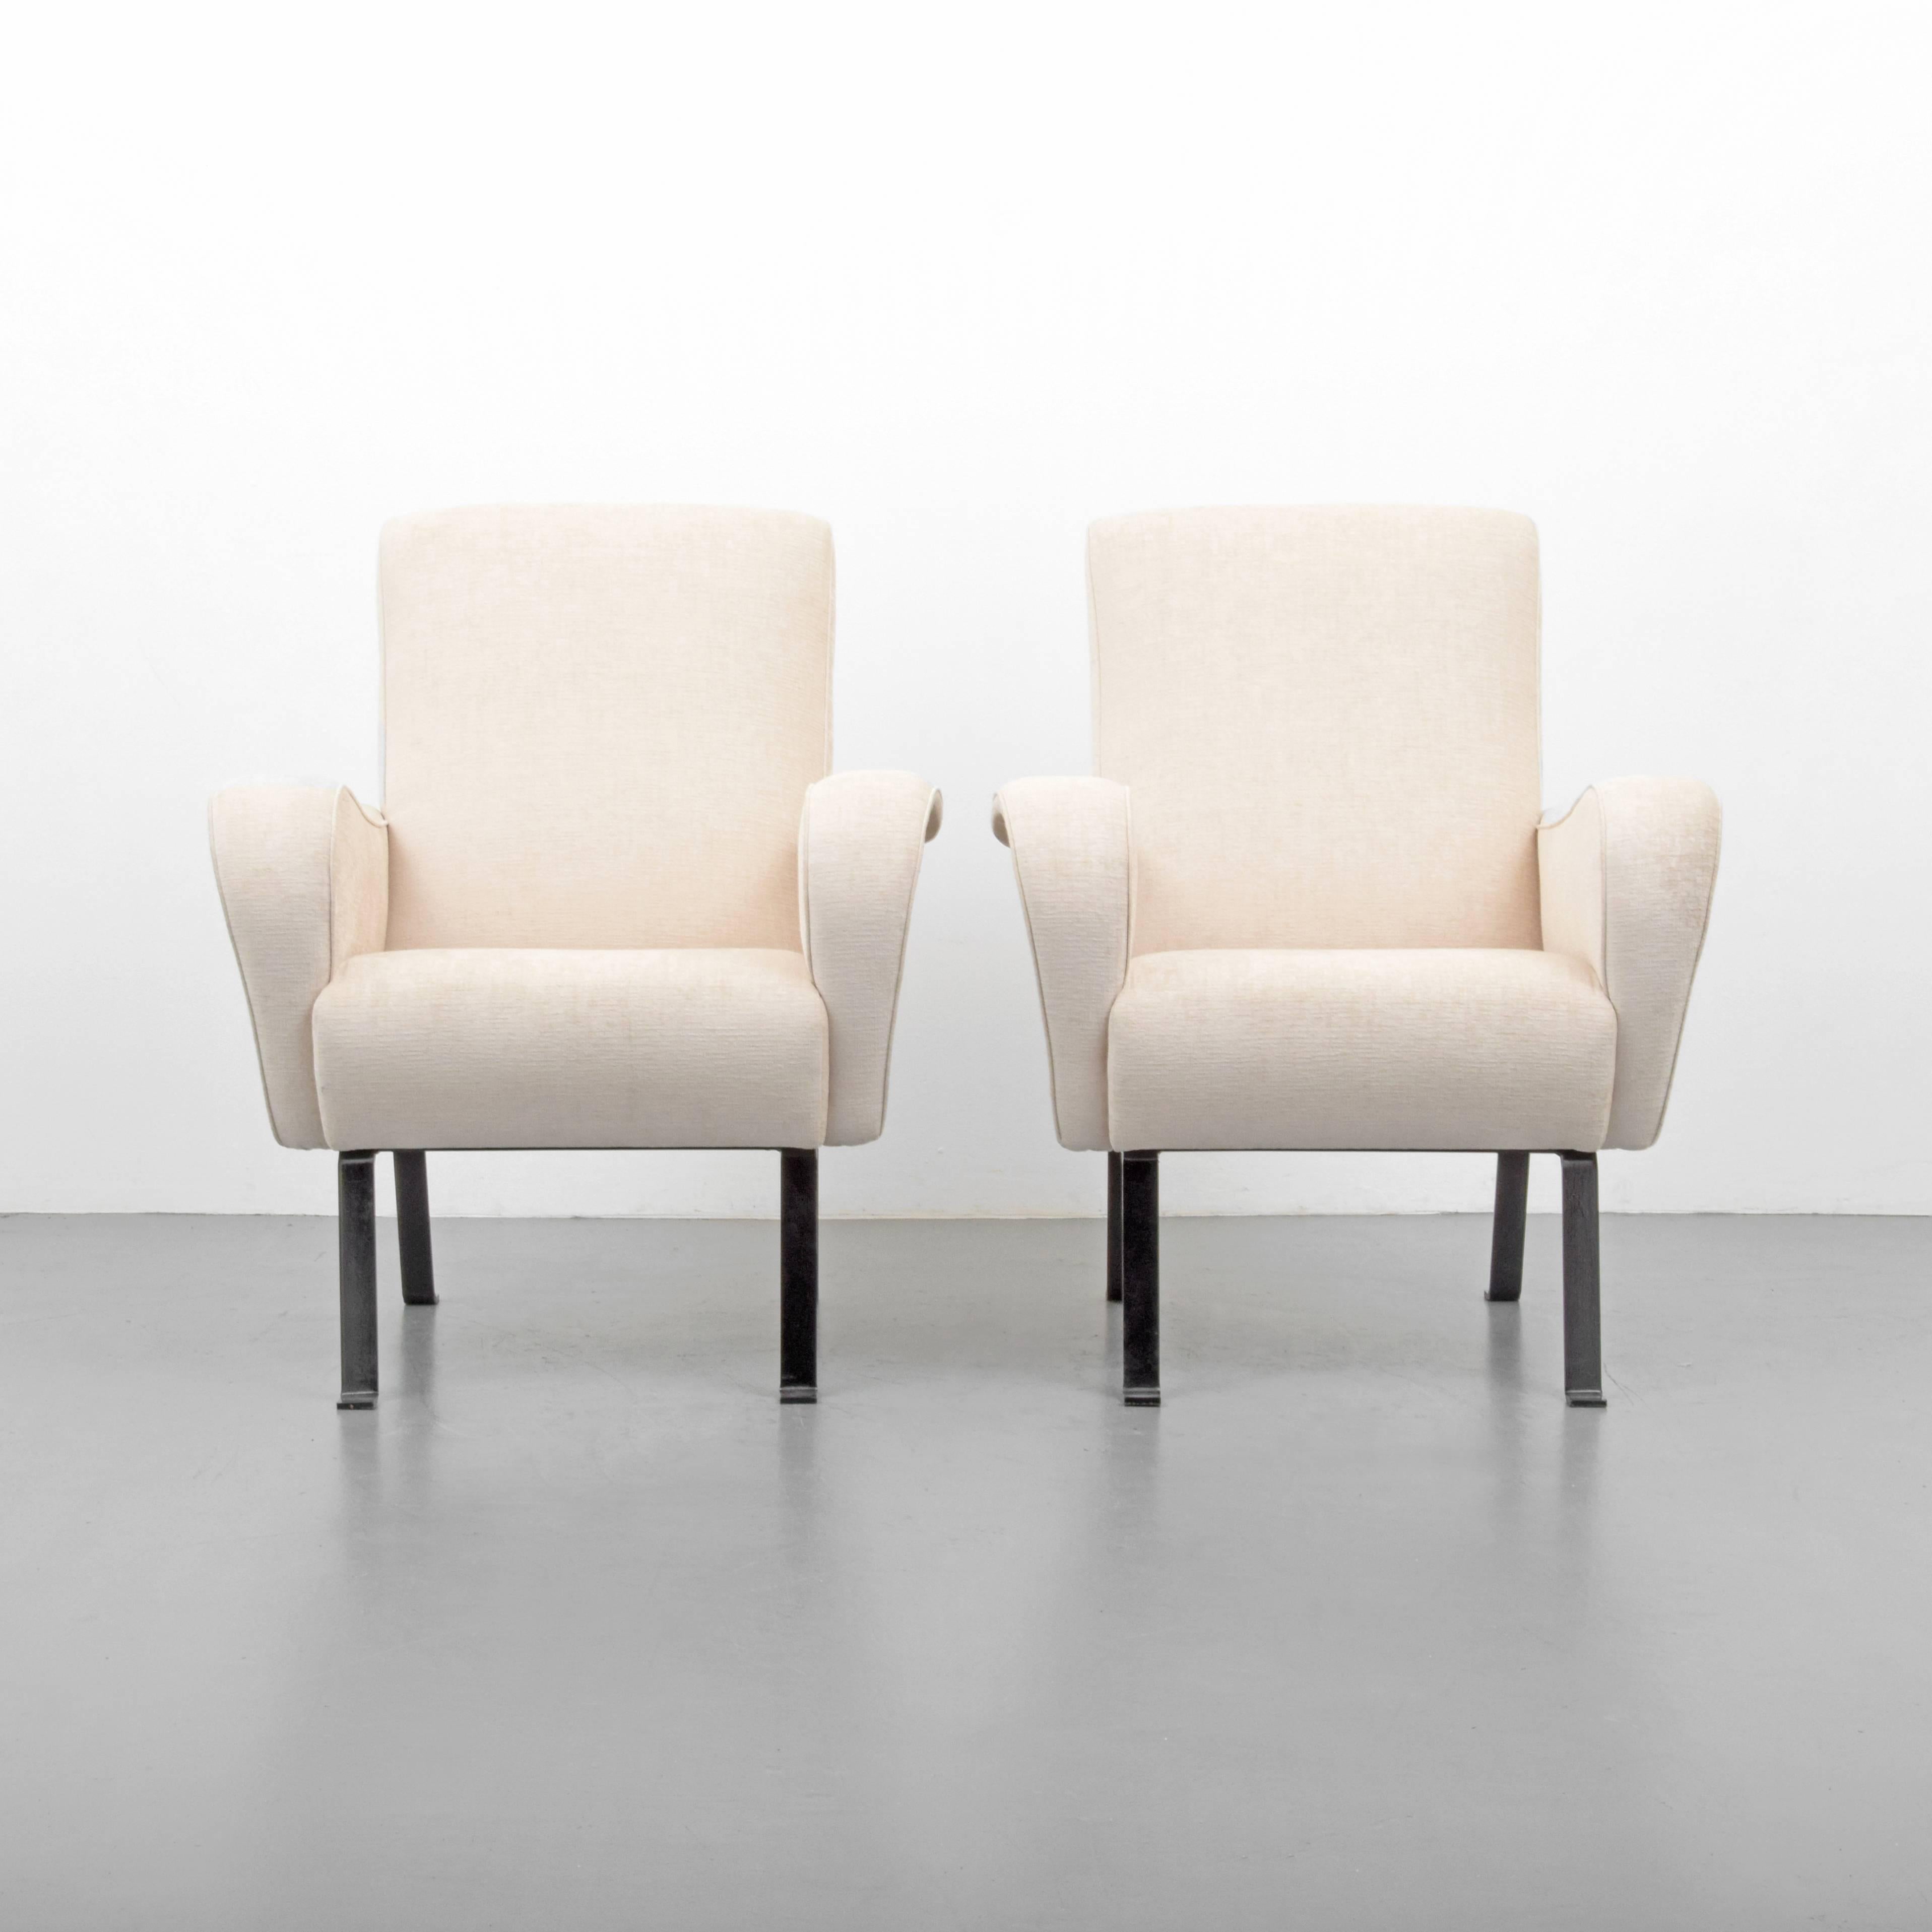 Italian Pair of Lounge Chairs, Manner of Luigi Caccia Dominioni